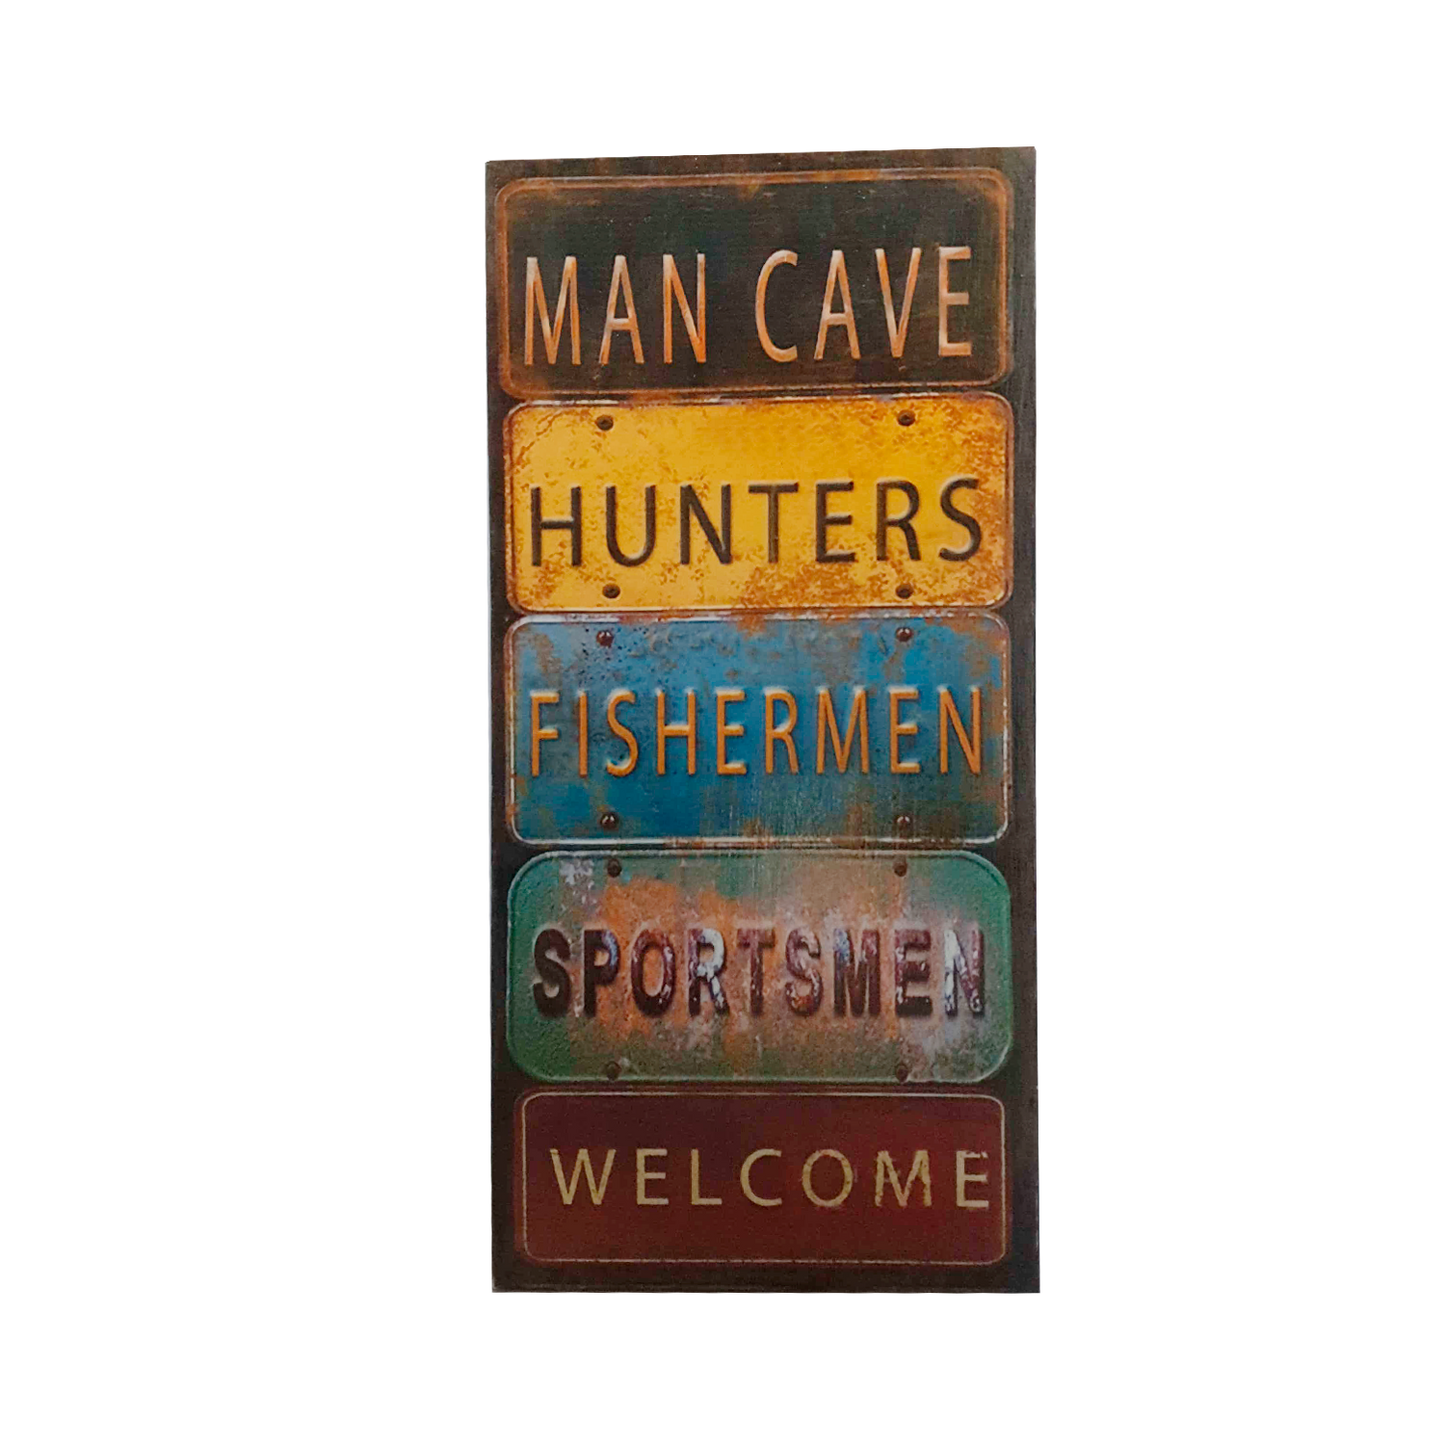 Afiche "Man cave hunters"